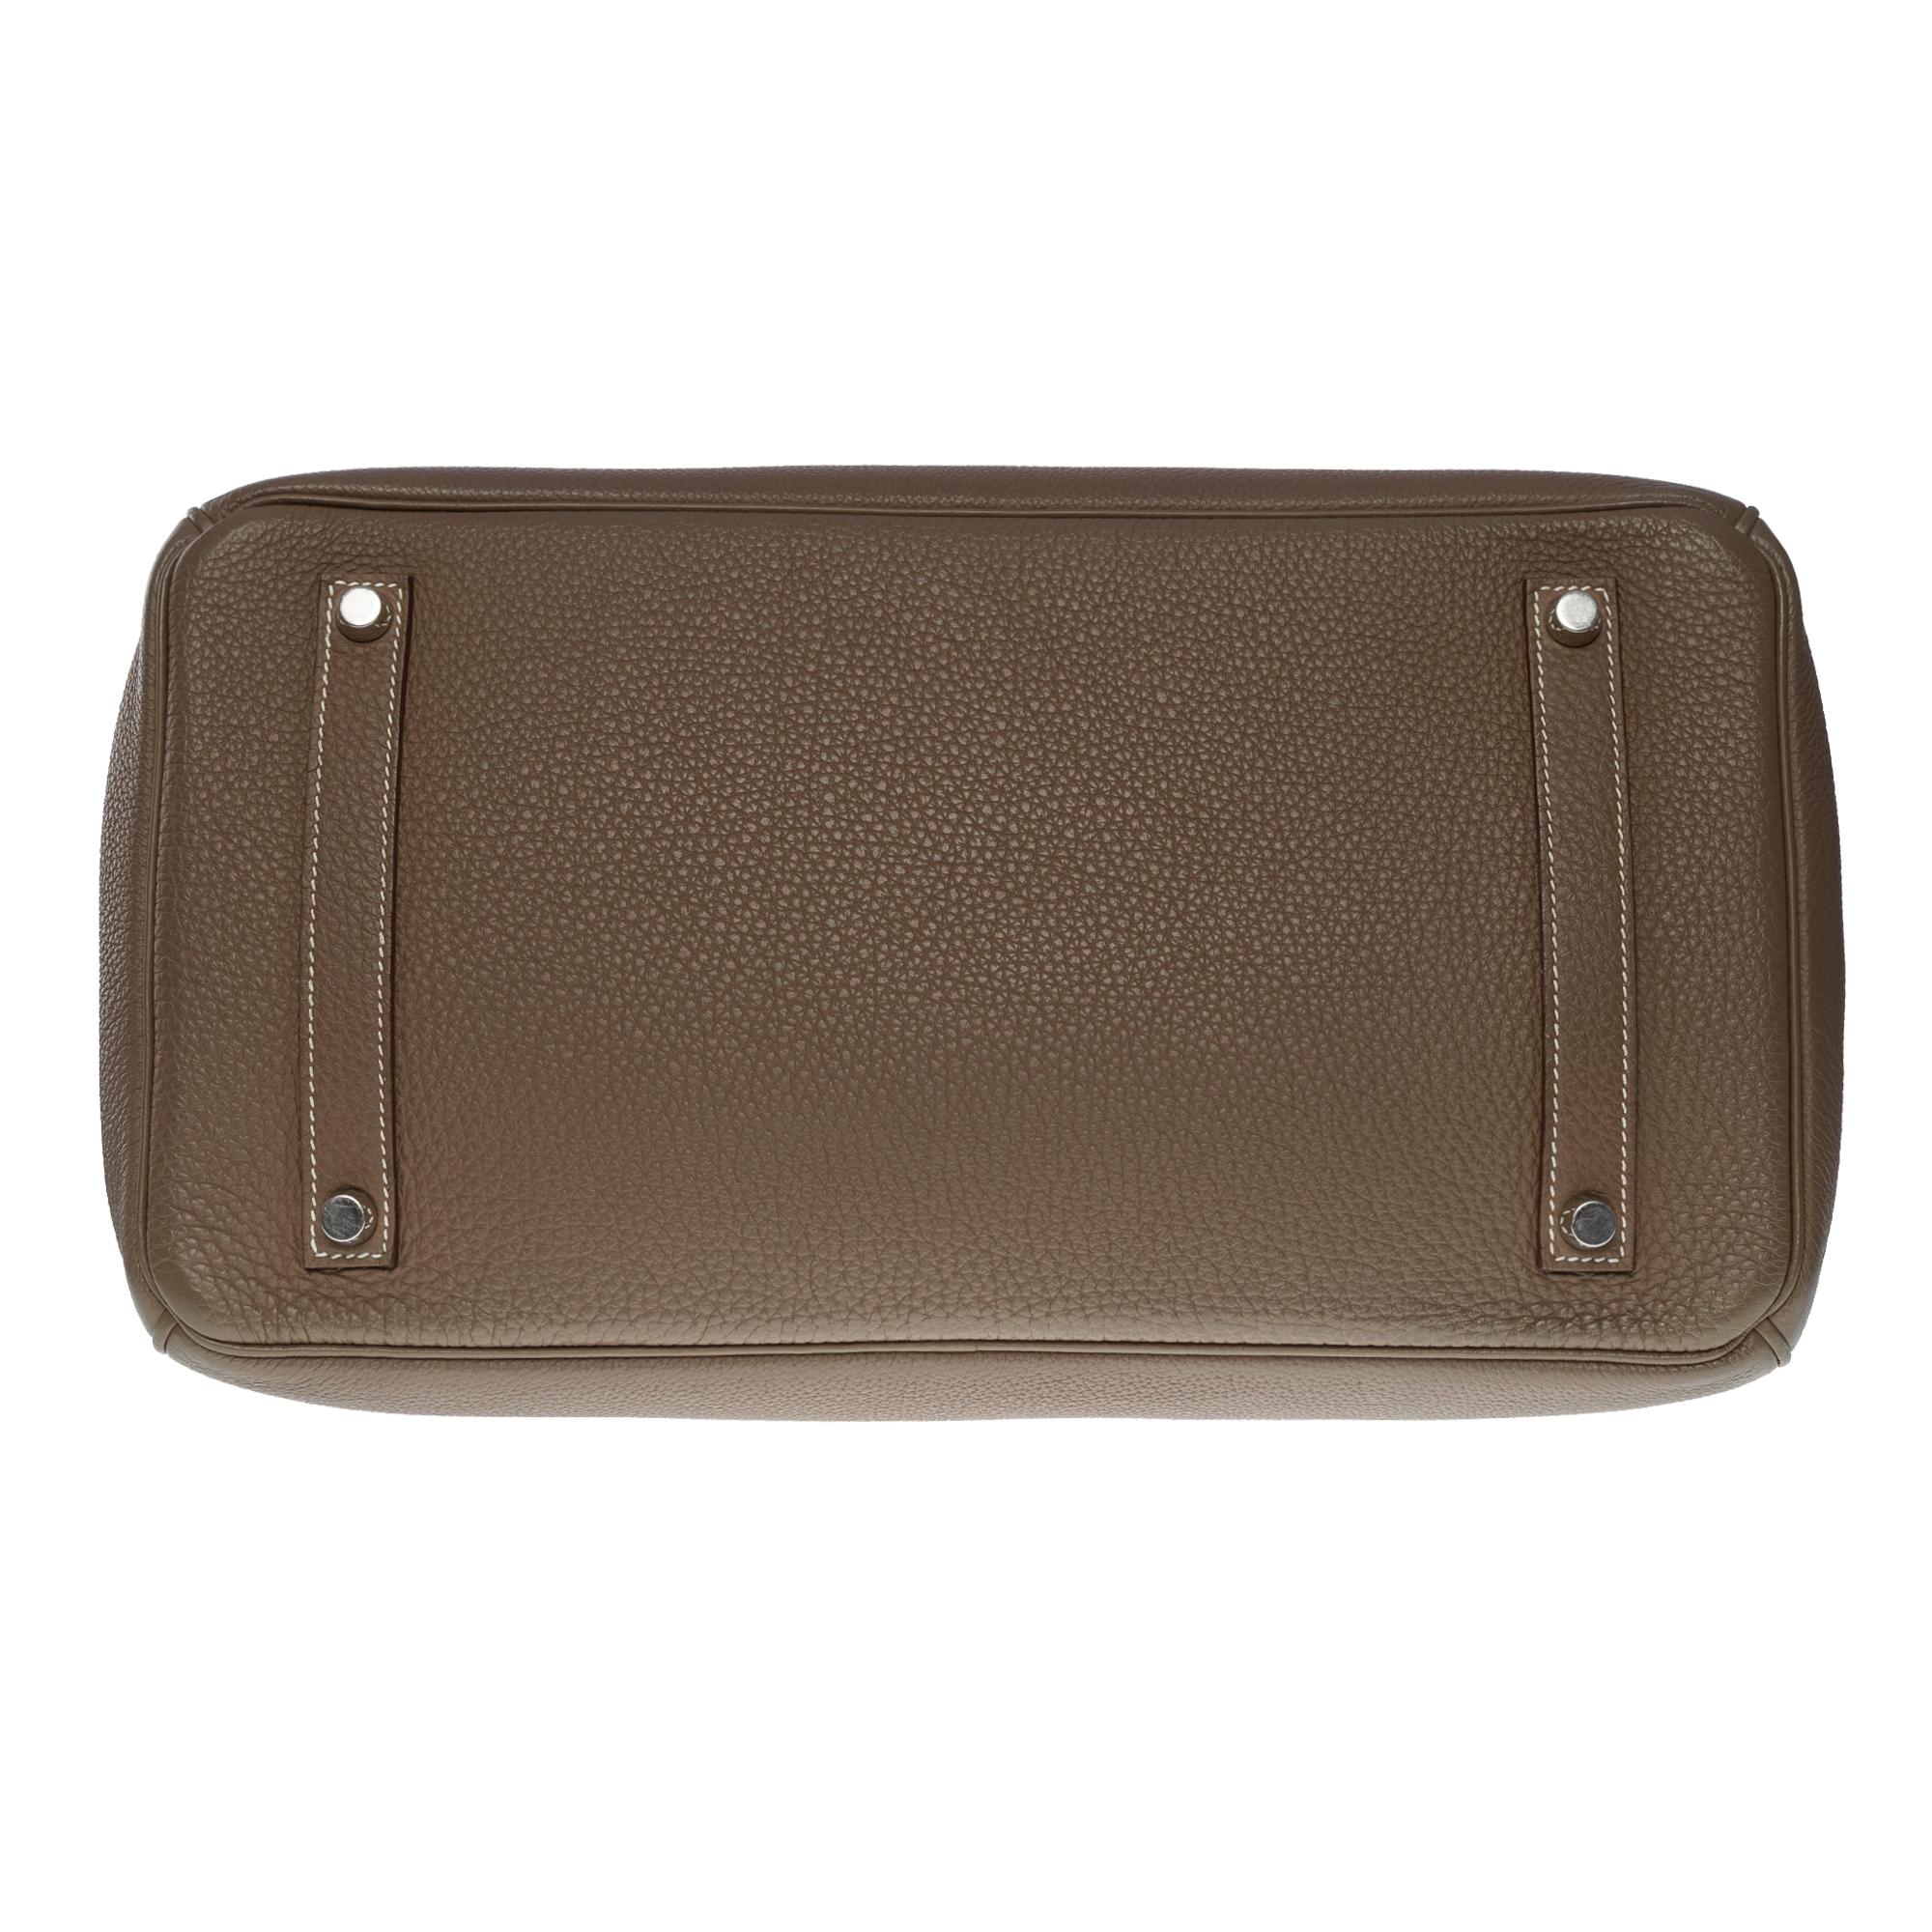 Stunning Hermès Birkin 35 handbag in etoupe Togo leather, SHW 5